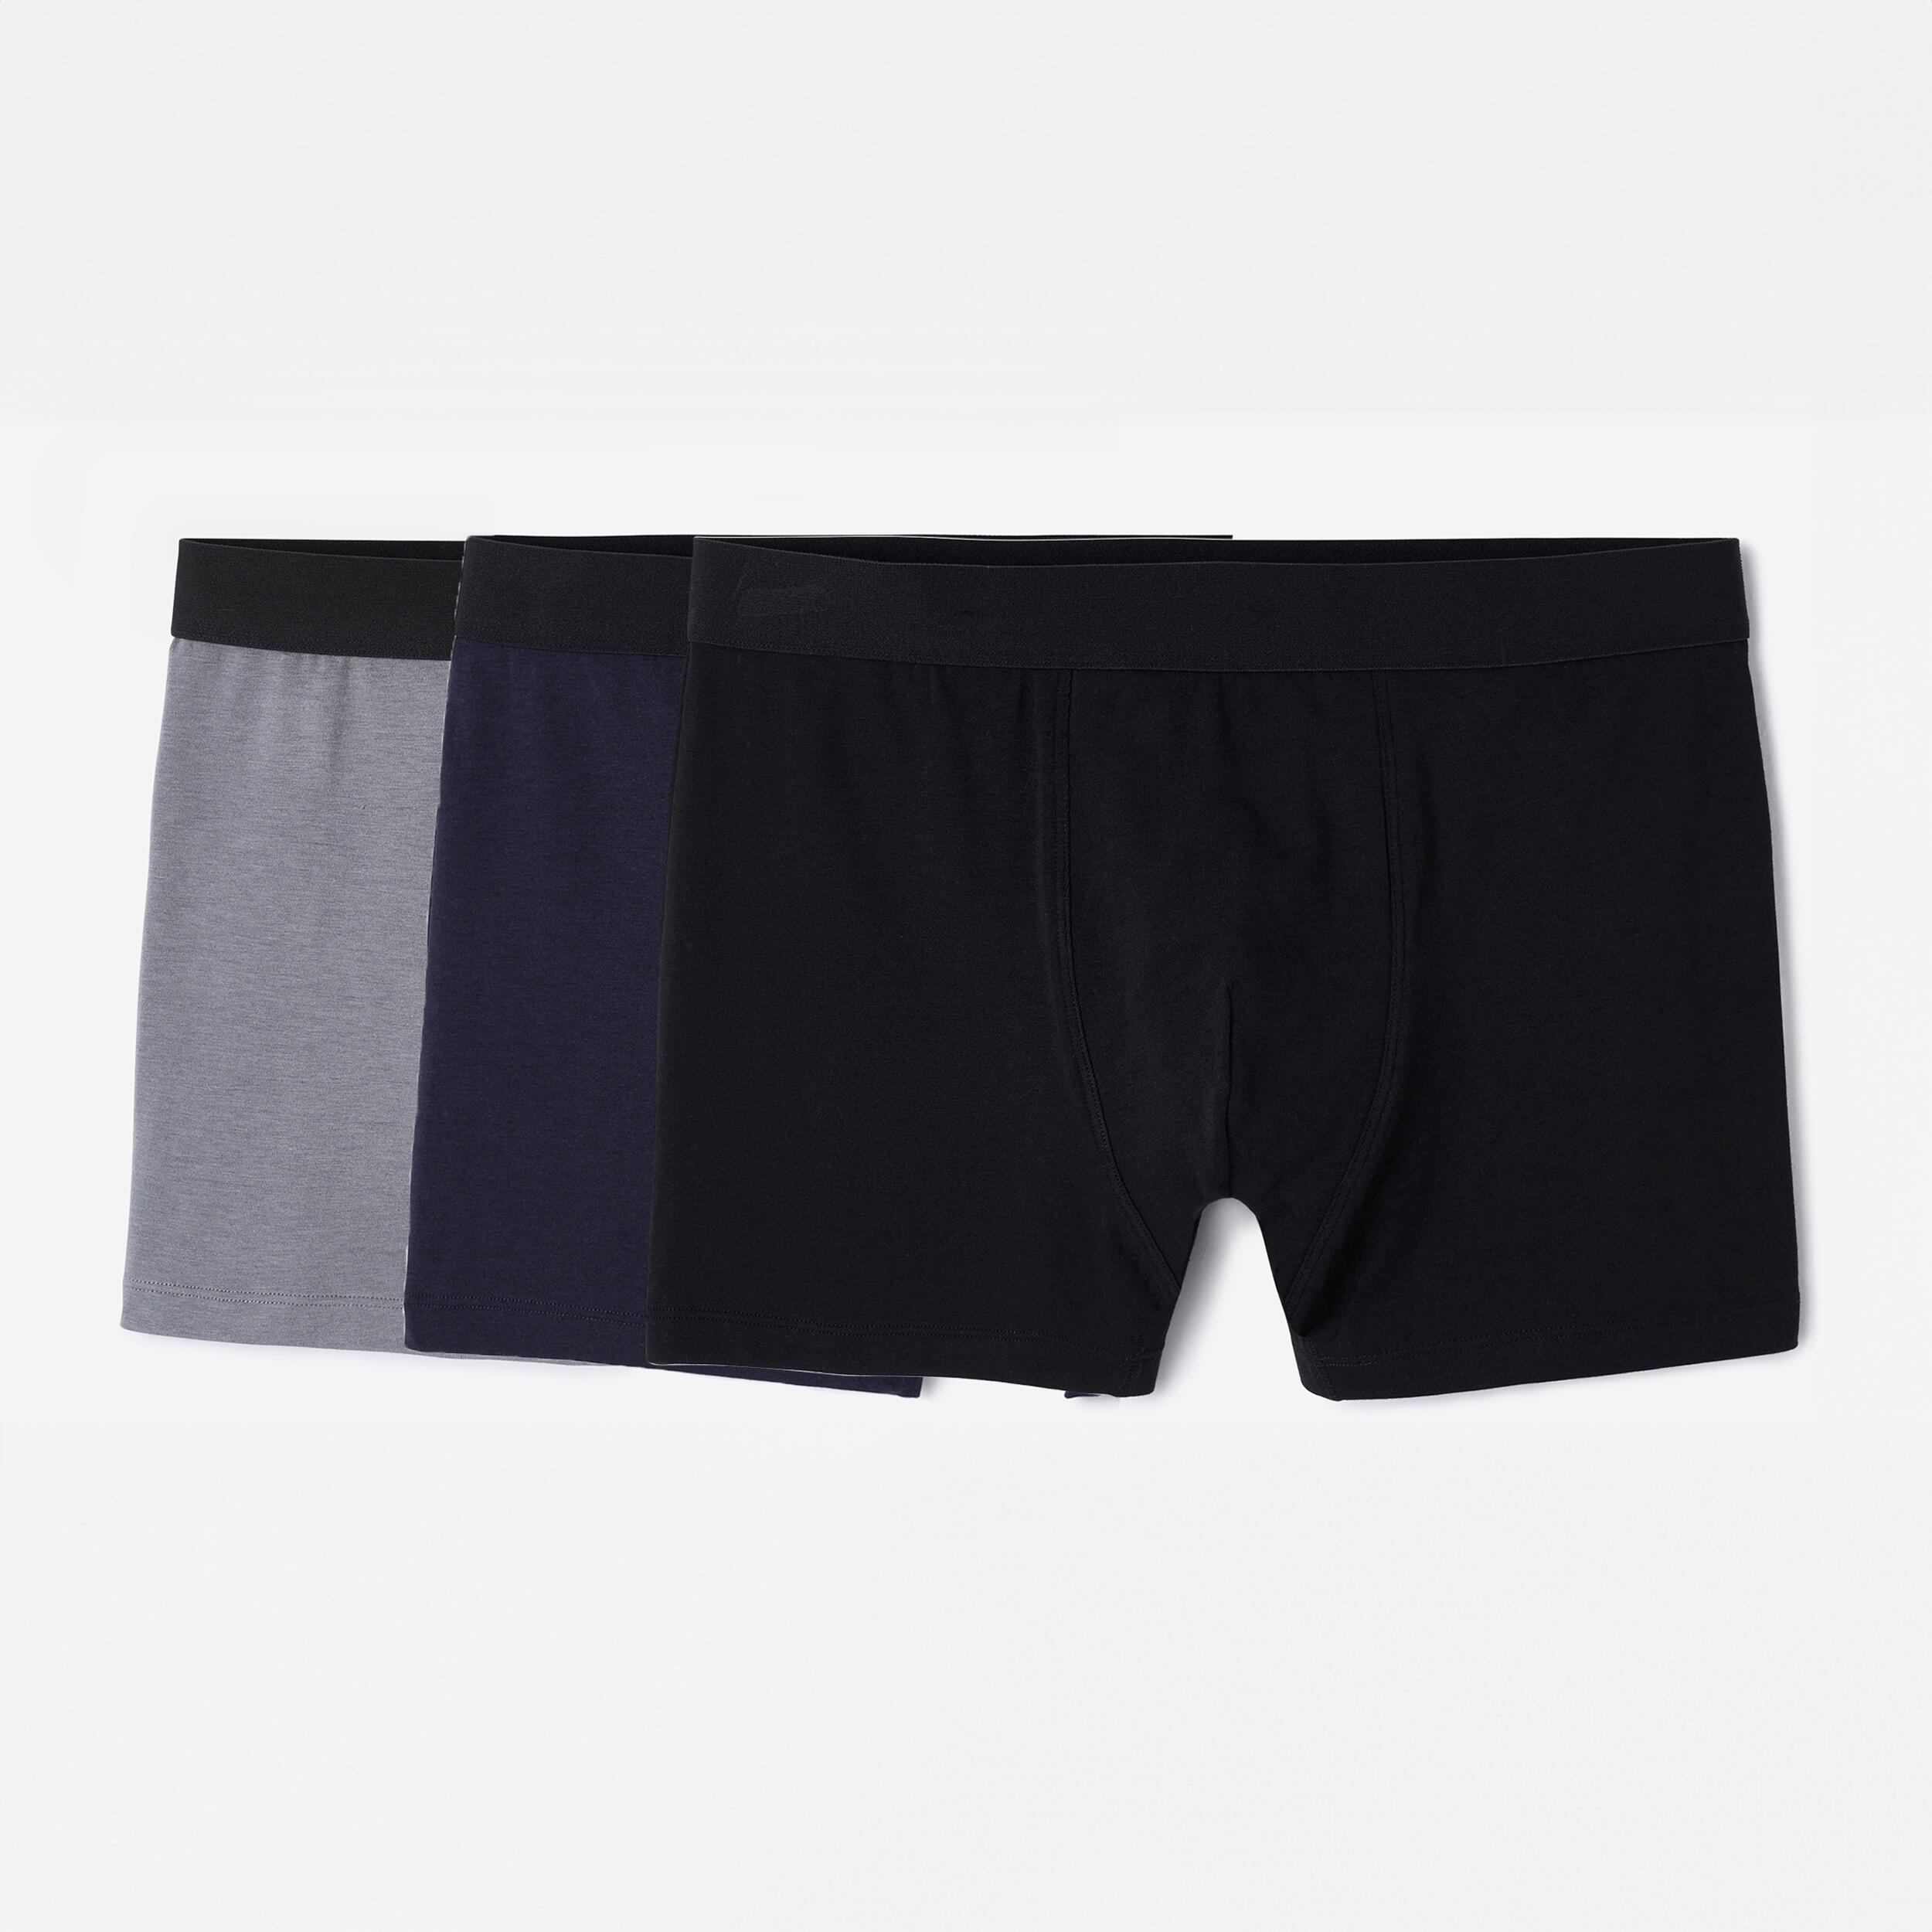 Men’s Fitness Boxer Shorts